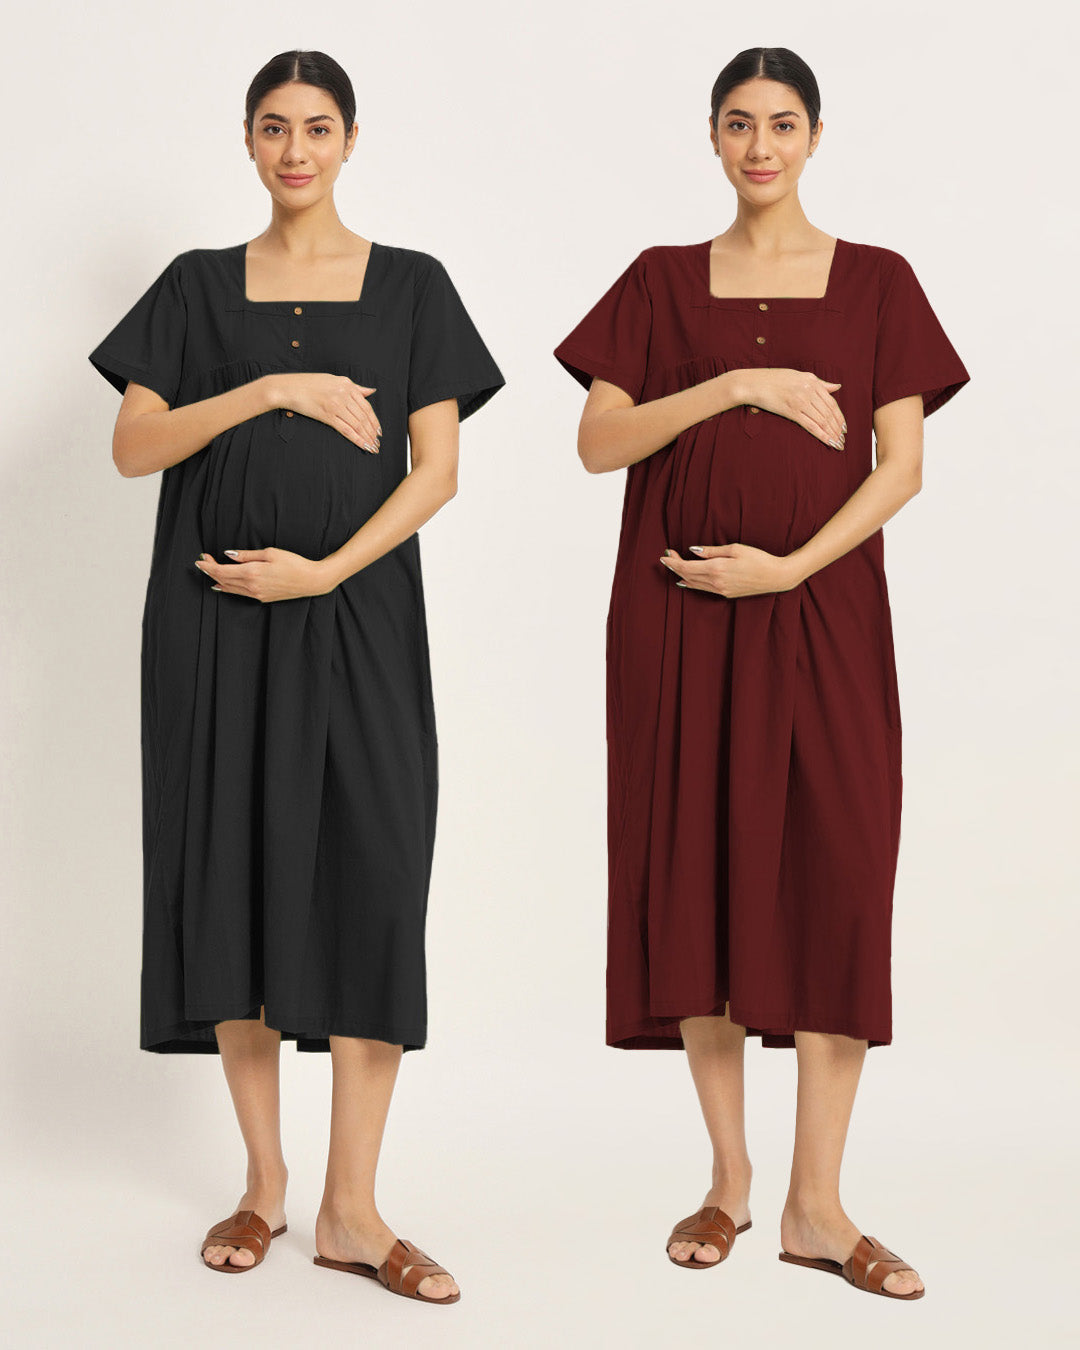 Combo: Black & Russet Red Bump Blessing Maternity & Nursing Dress - Set of 2